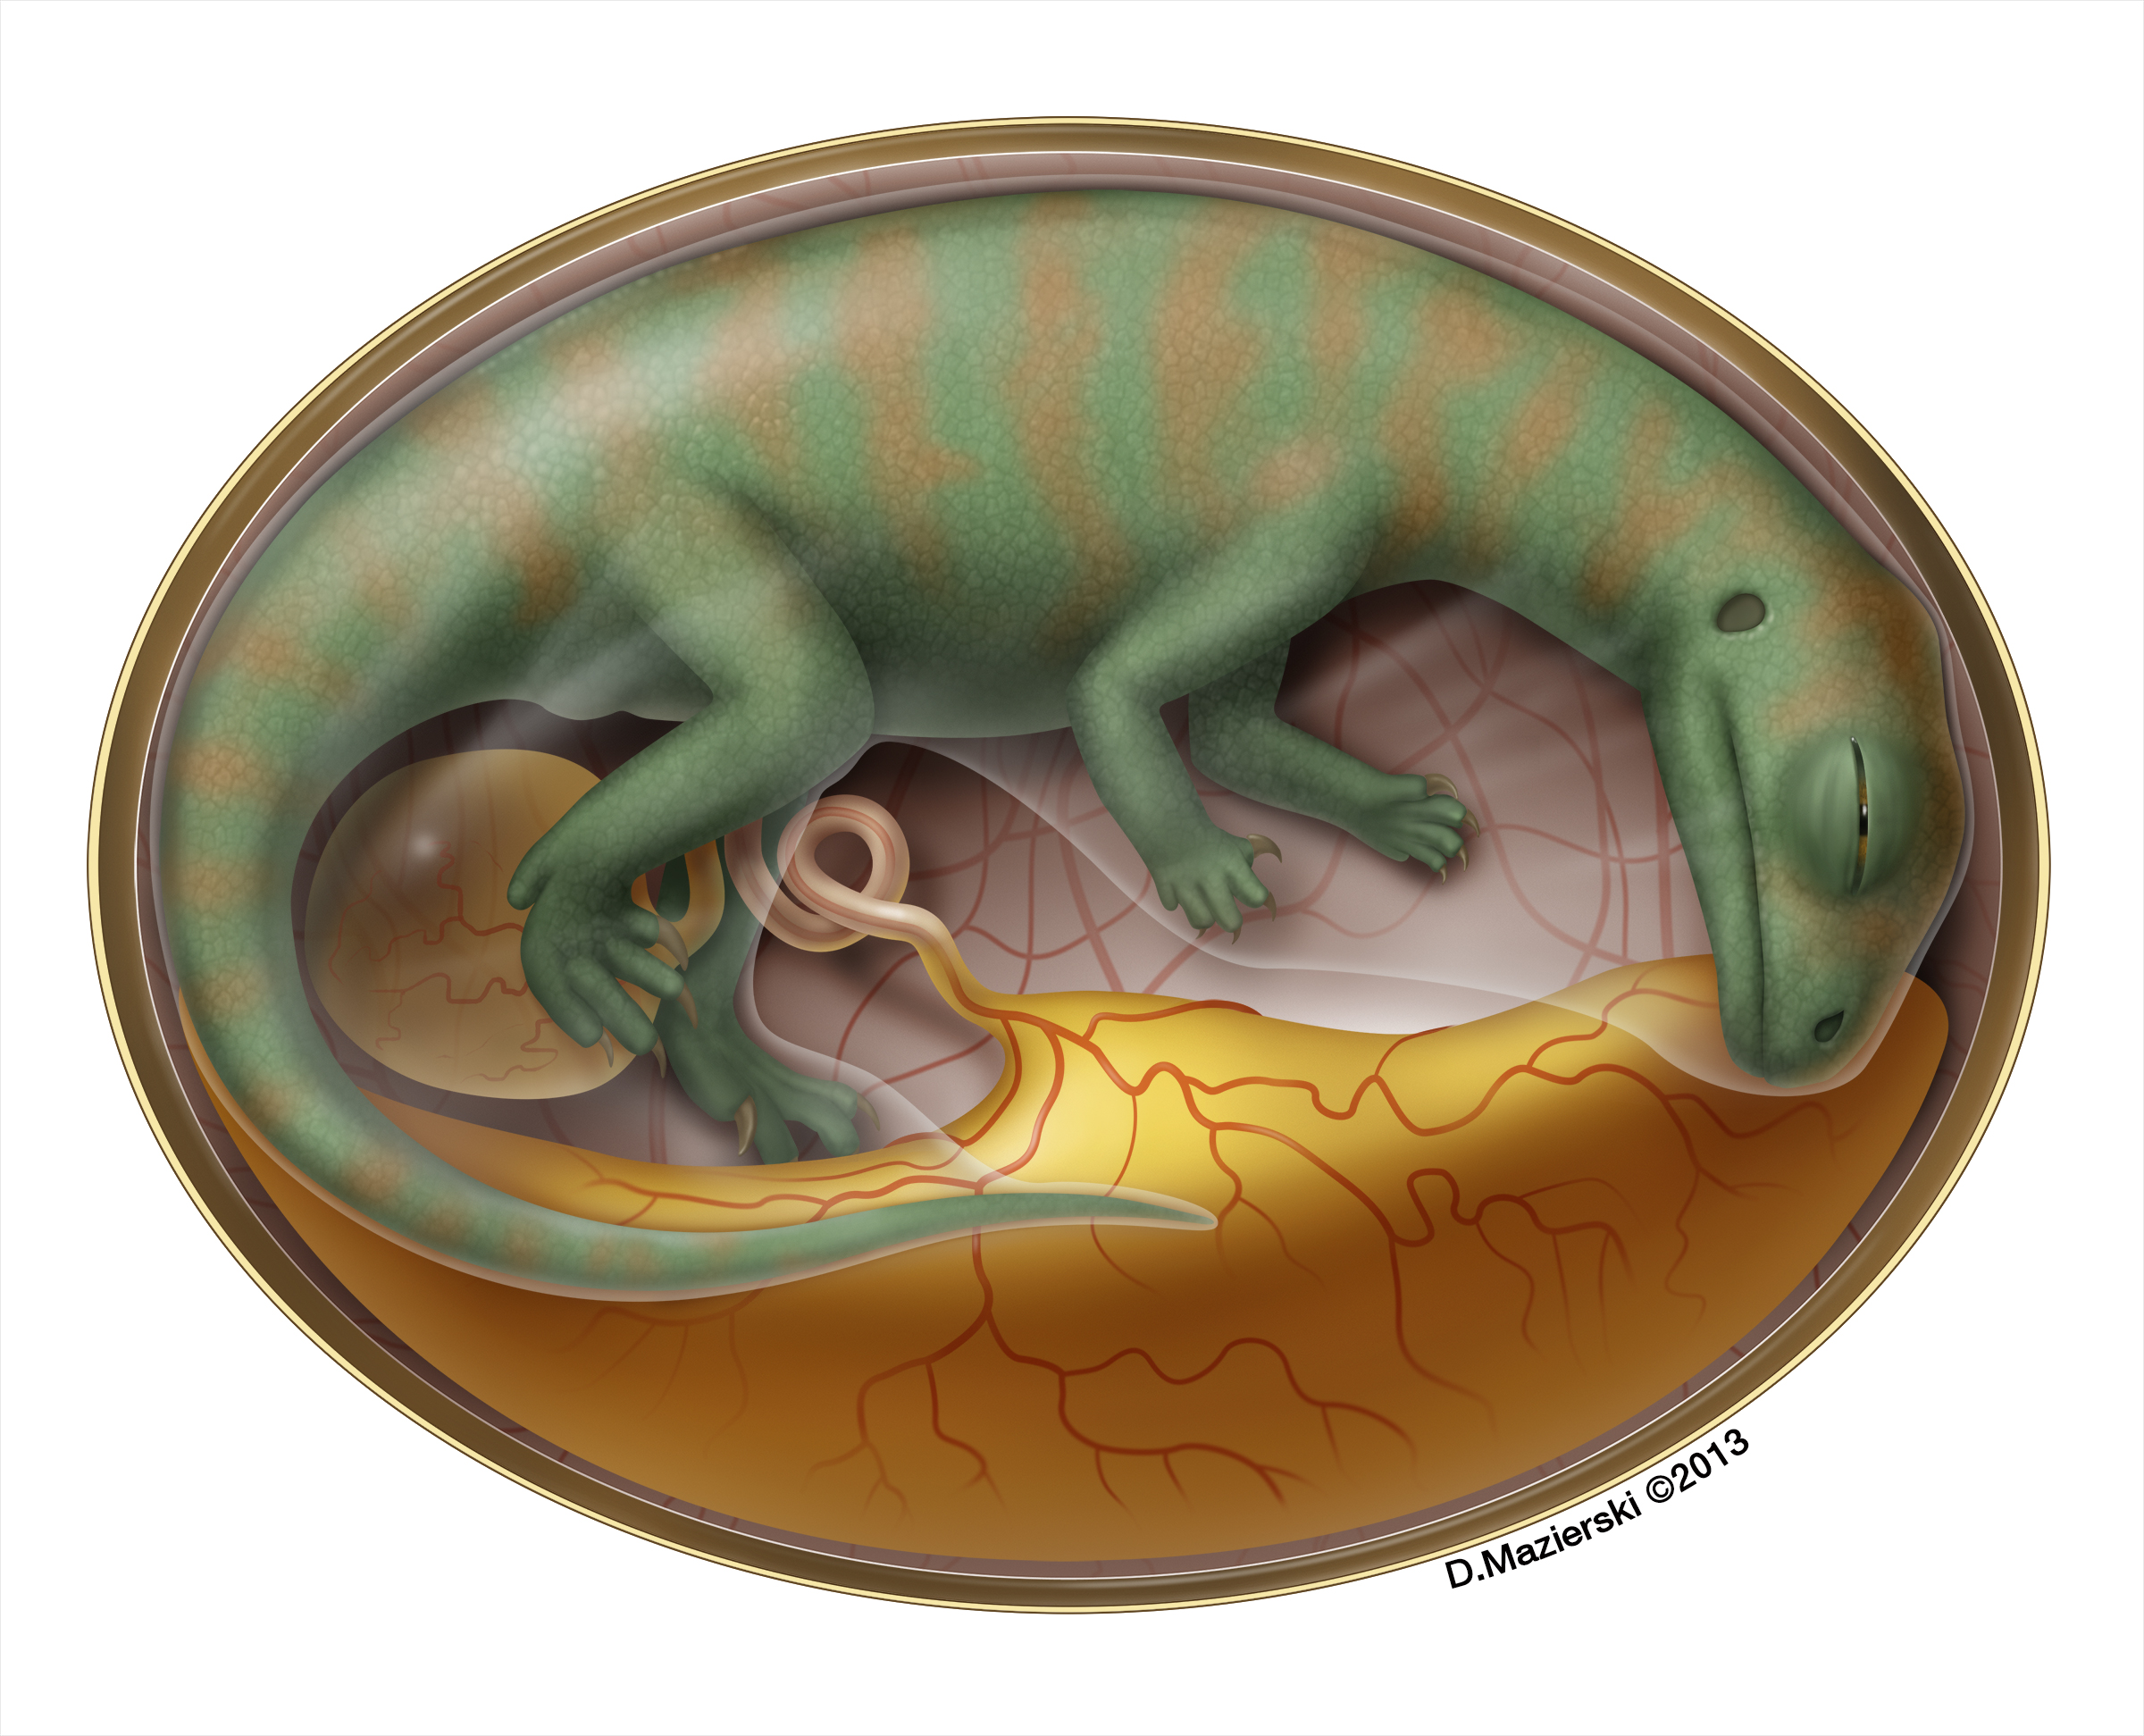 Dinosaur embryo